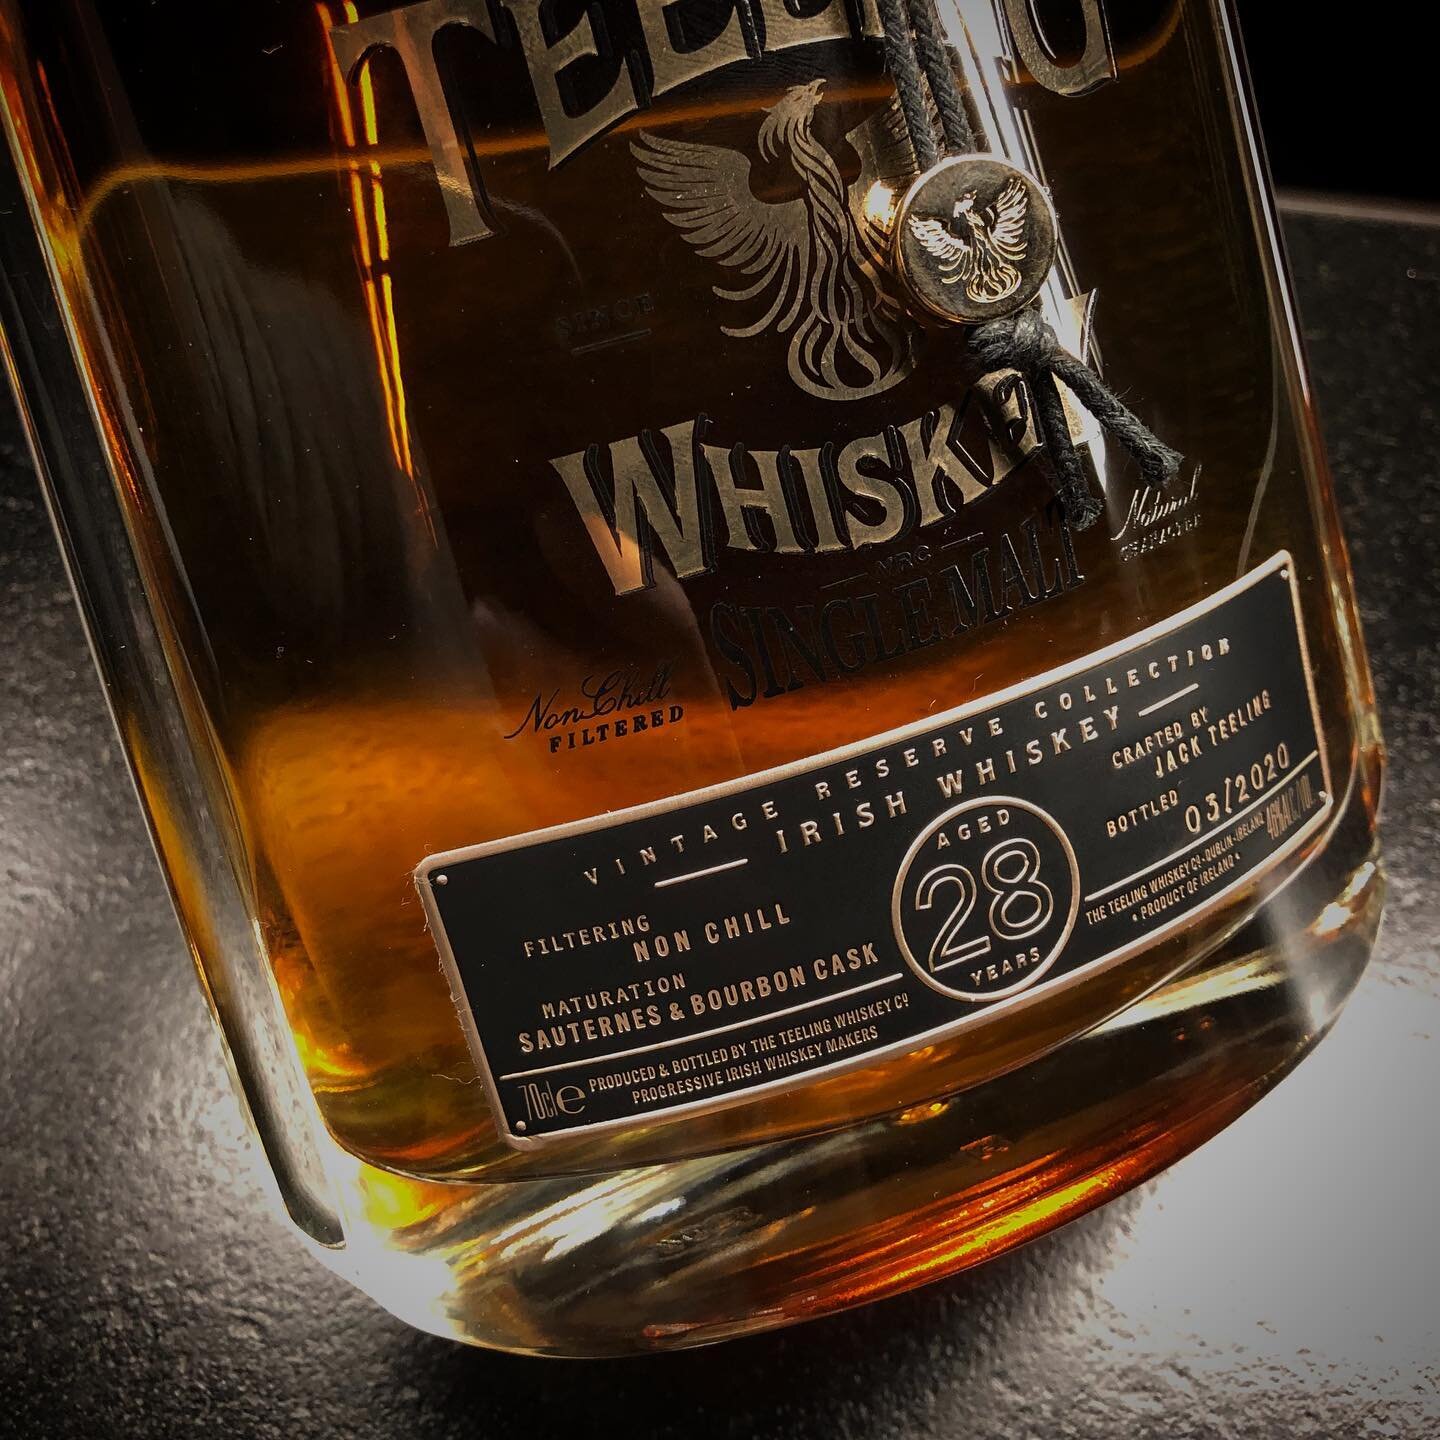 Teeling 28 Years old 👌🏼👌🏼👌🏼
.
.
#whiskey #irishwhiskey #irishsinglemalt #teeling #teelingvintagereserve #teelingwhiskey #teelingdistillery #whiskeylover #whiskeycollection #whiskeycollector